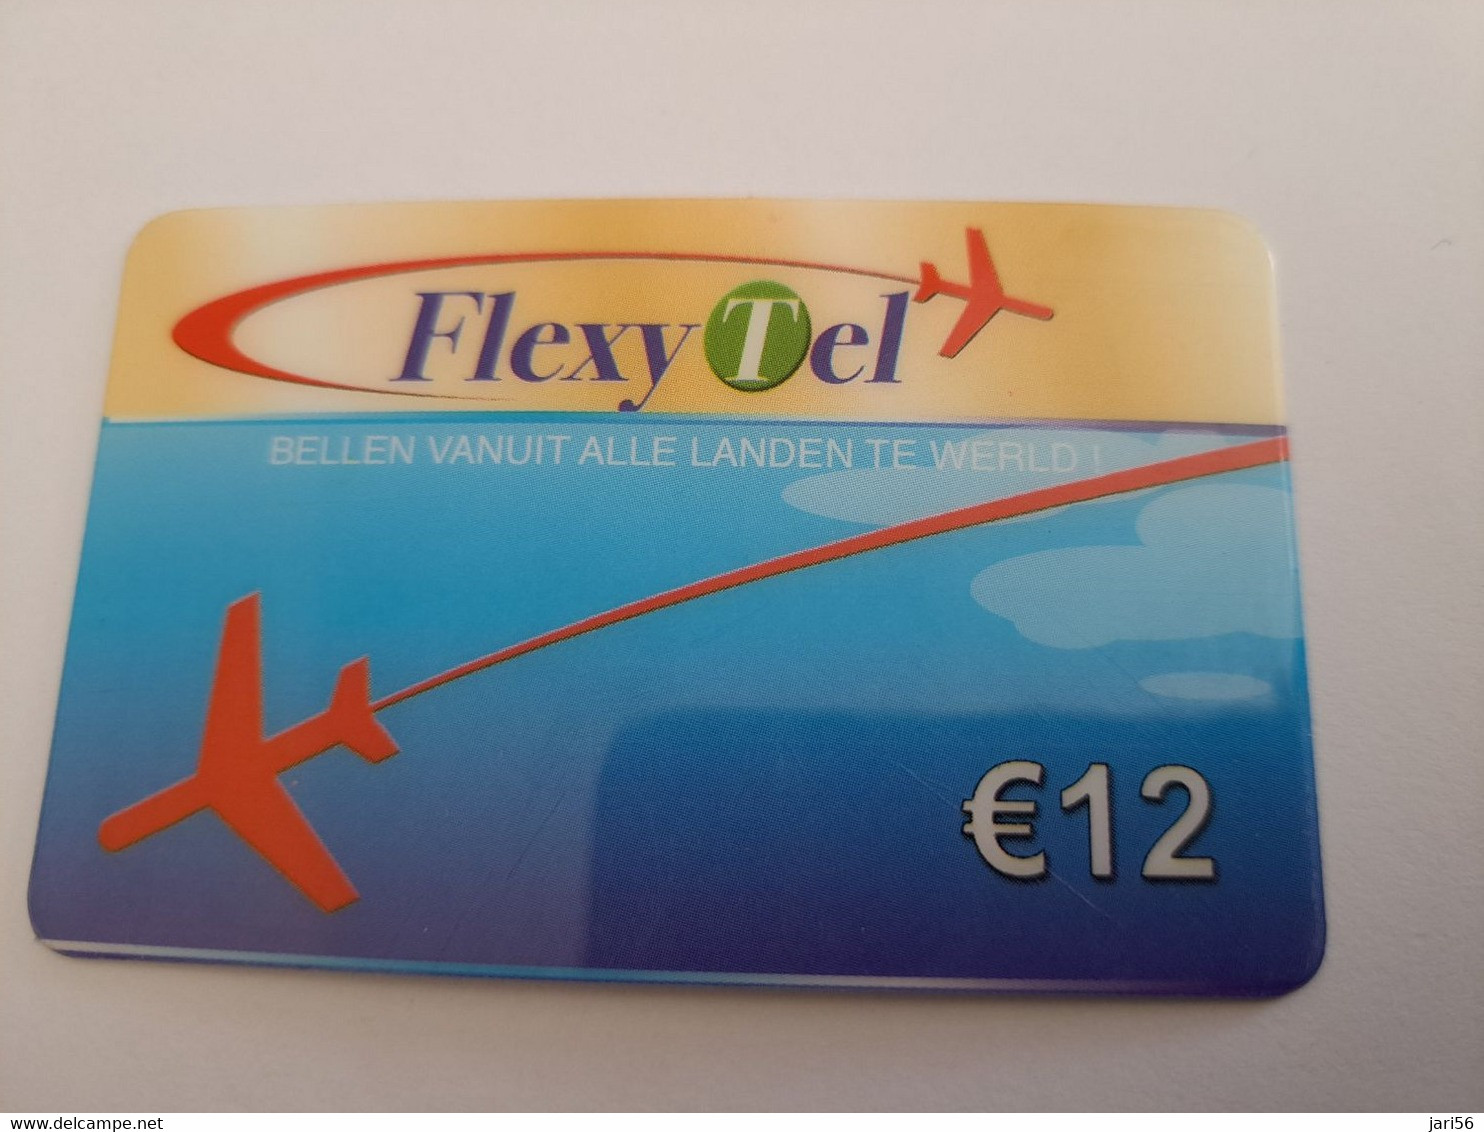 NETHERLANDS  € 12,- FLEXY TEL /PLANE     / OLDER CARD    PREPAID  Nice Used  ** 11204** - Cartes GSM, Prépayées Et Recharges